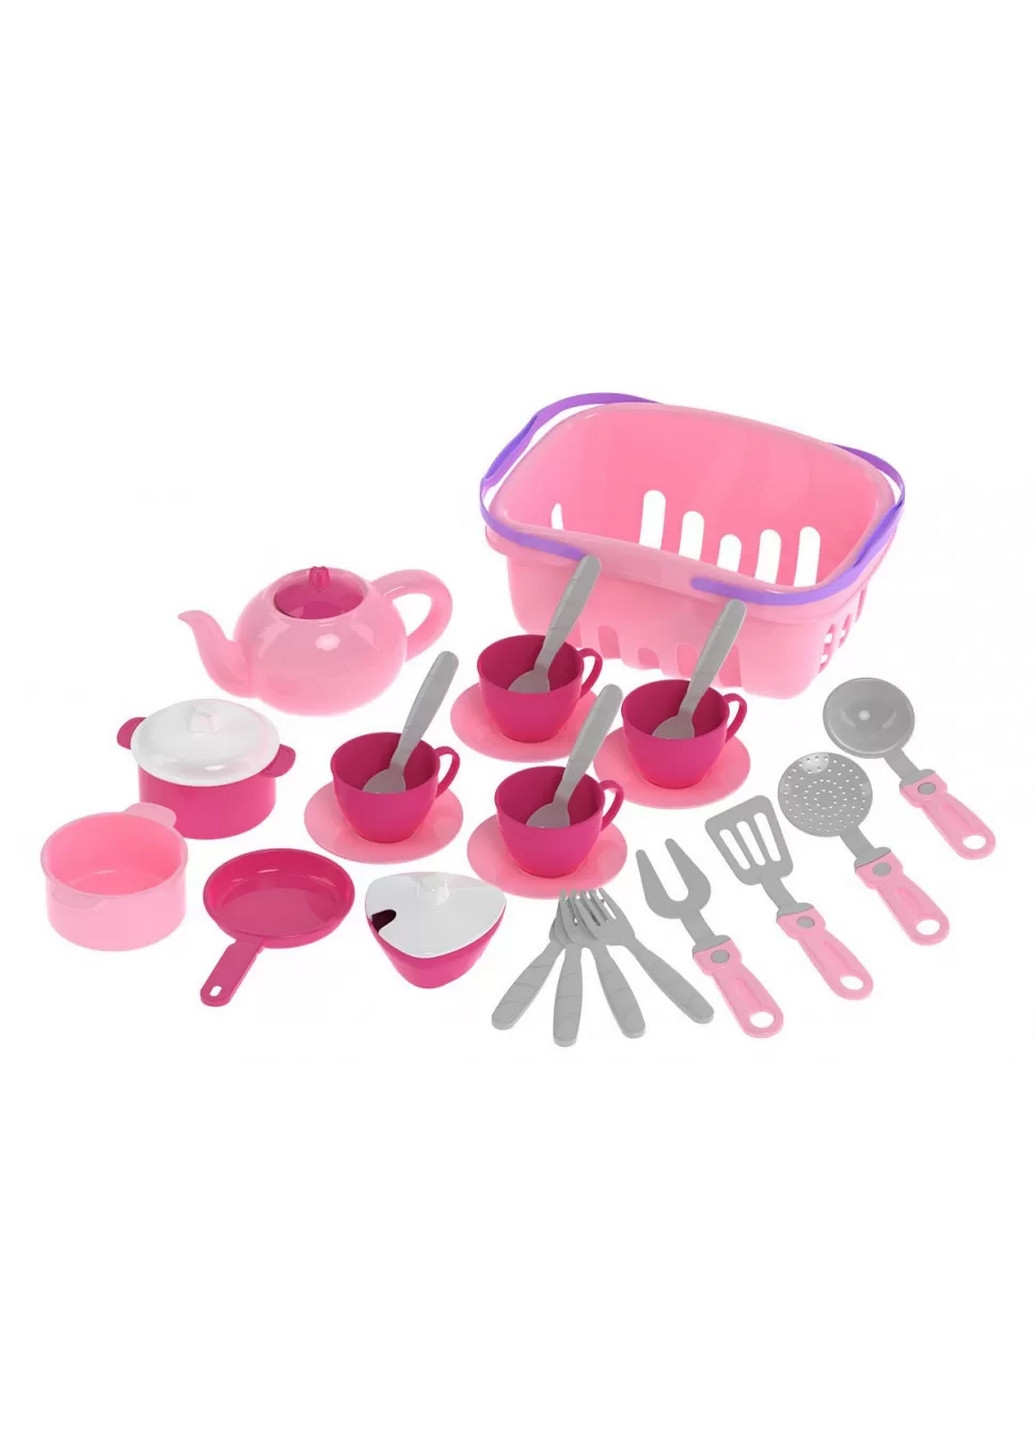 Игровой кухонный набор посуды с корзинкой 18,5х12,3х27 см ТехноК (260512419)